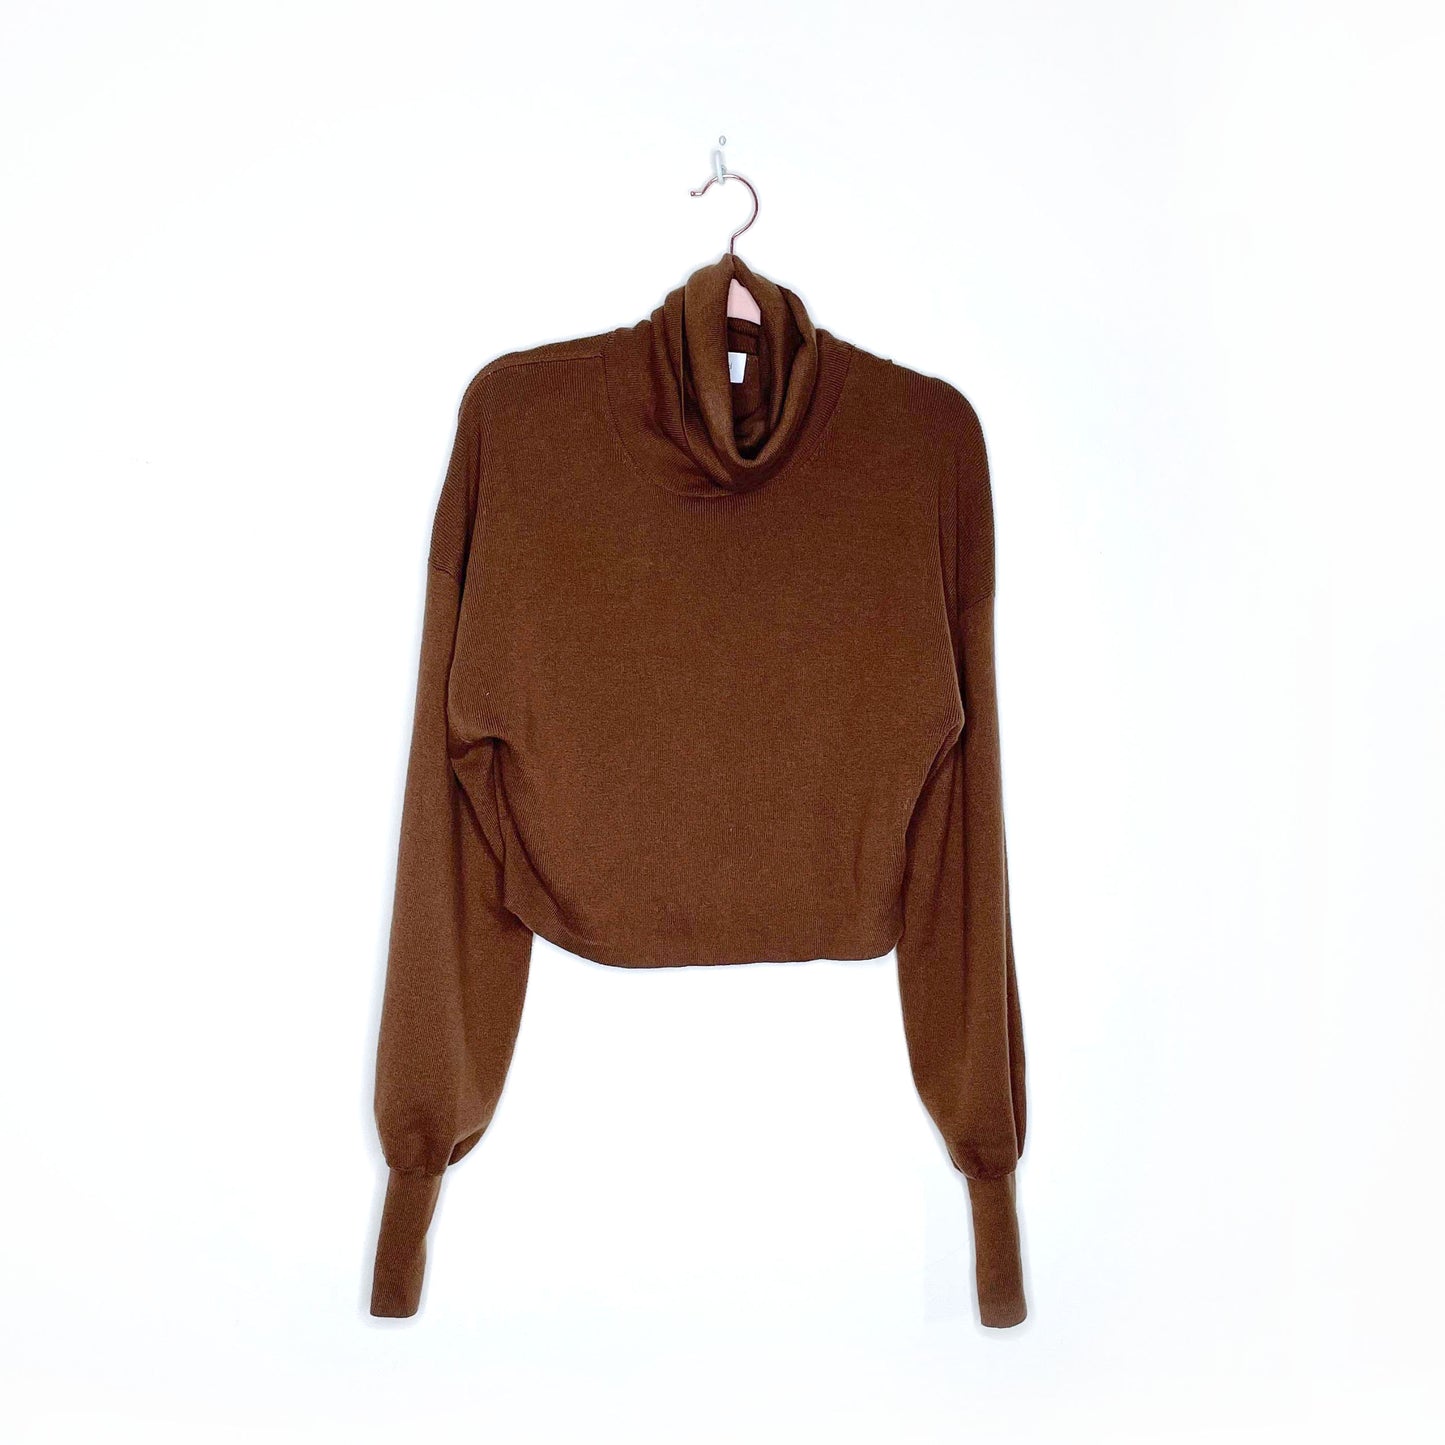 wilfred rebecca merino wool cropped turtleneck sweater - size large